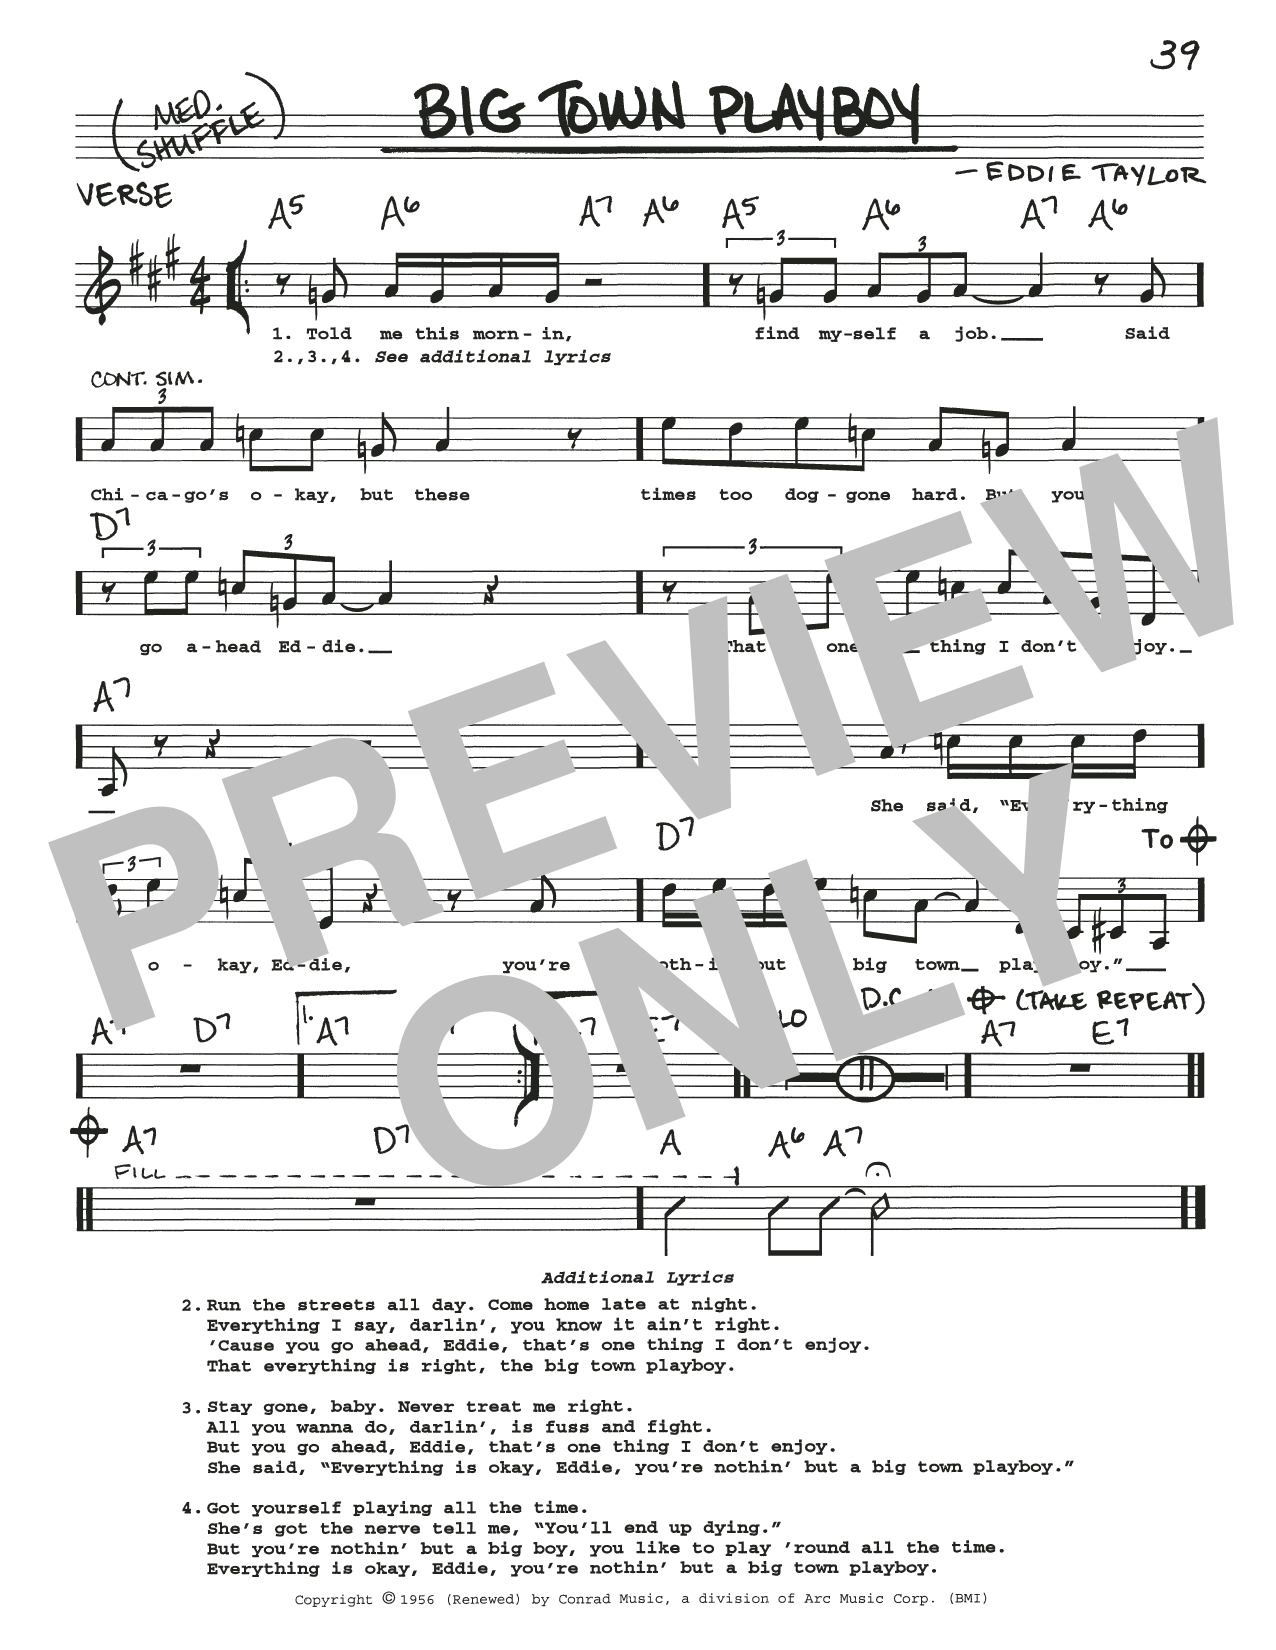 Eddie Taylor Big Town Playboy Sheet Music Notes & Chords for Real Book – Melody, Lyrics & Chords - Download or Print PDF